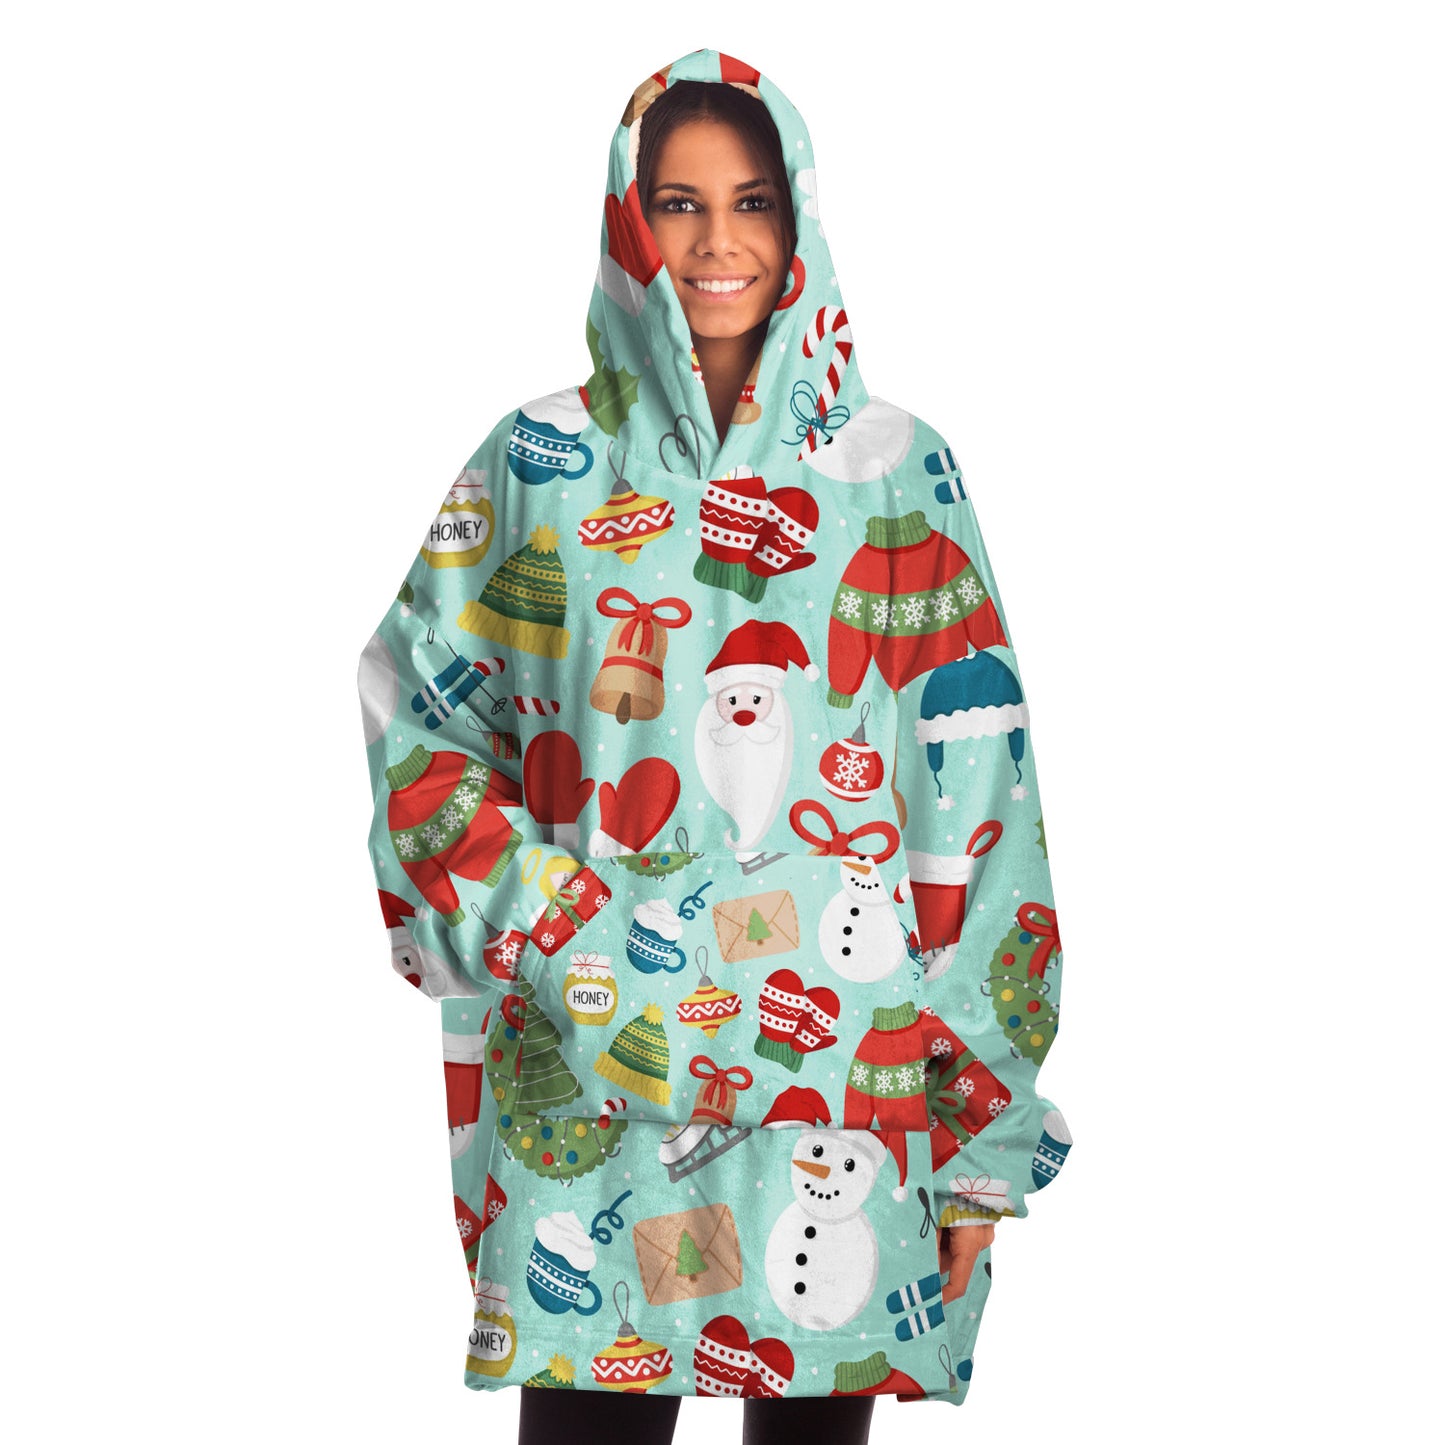 Christmas snug hoodie blanket for holiday seanson